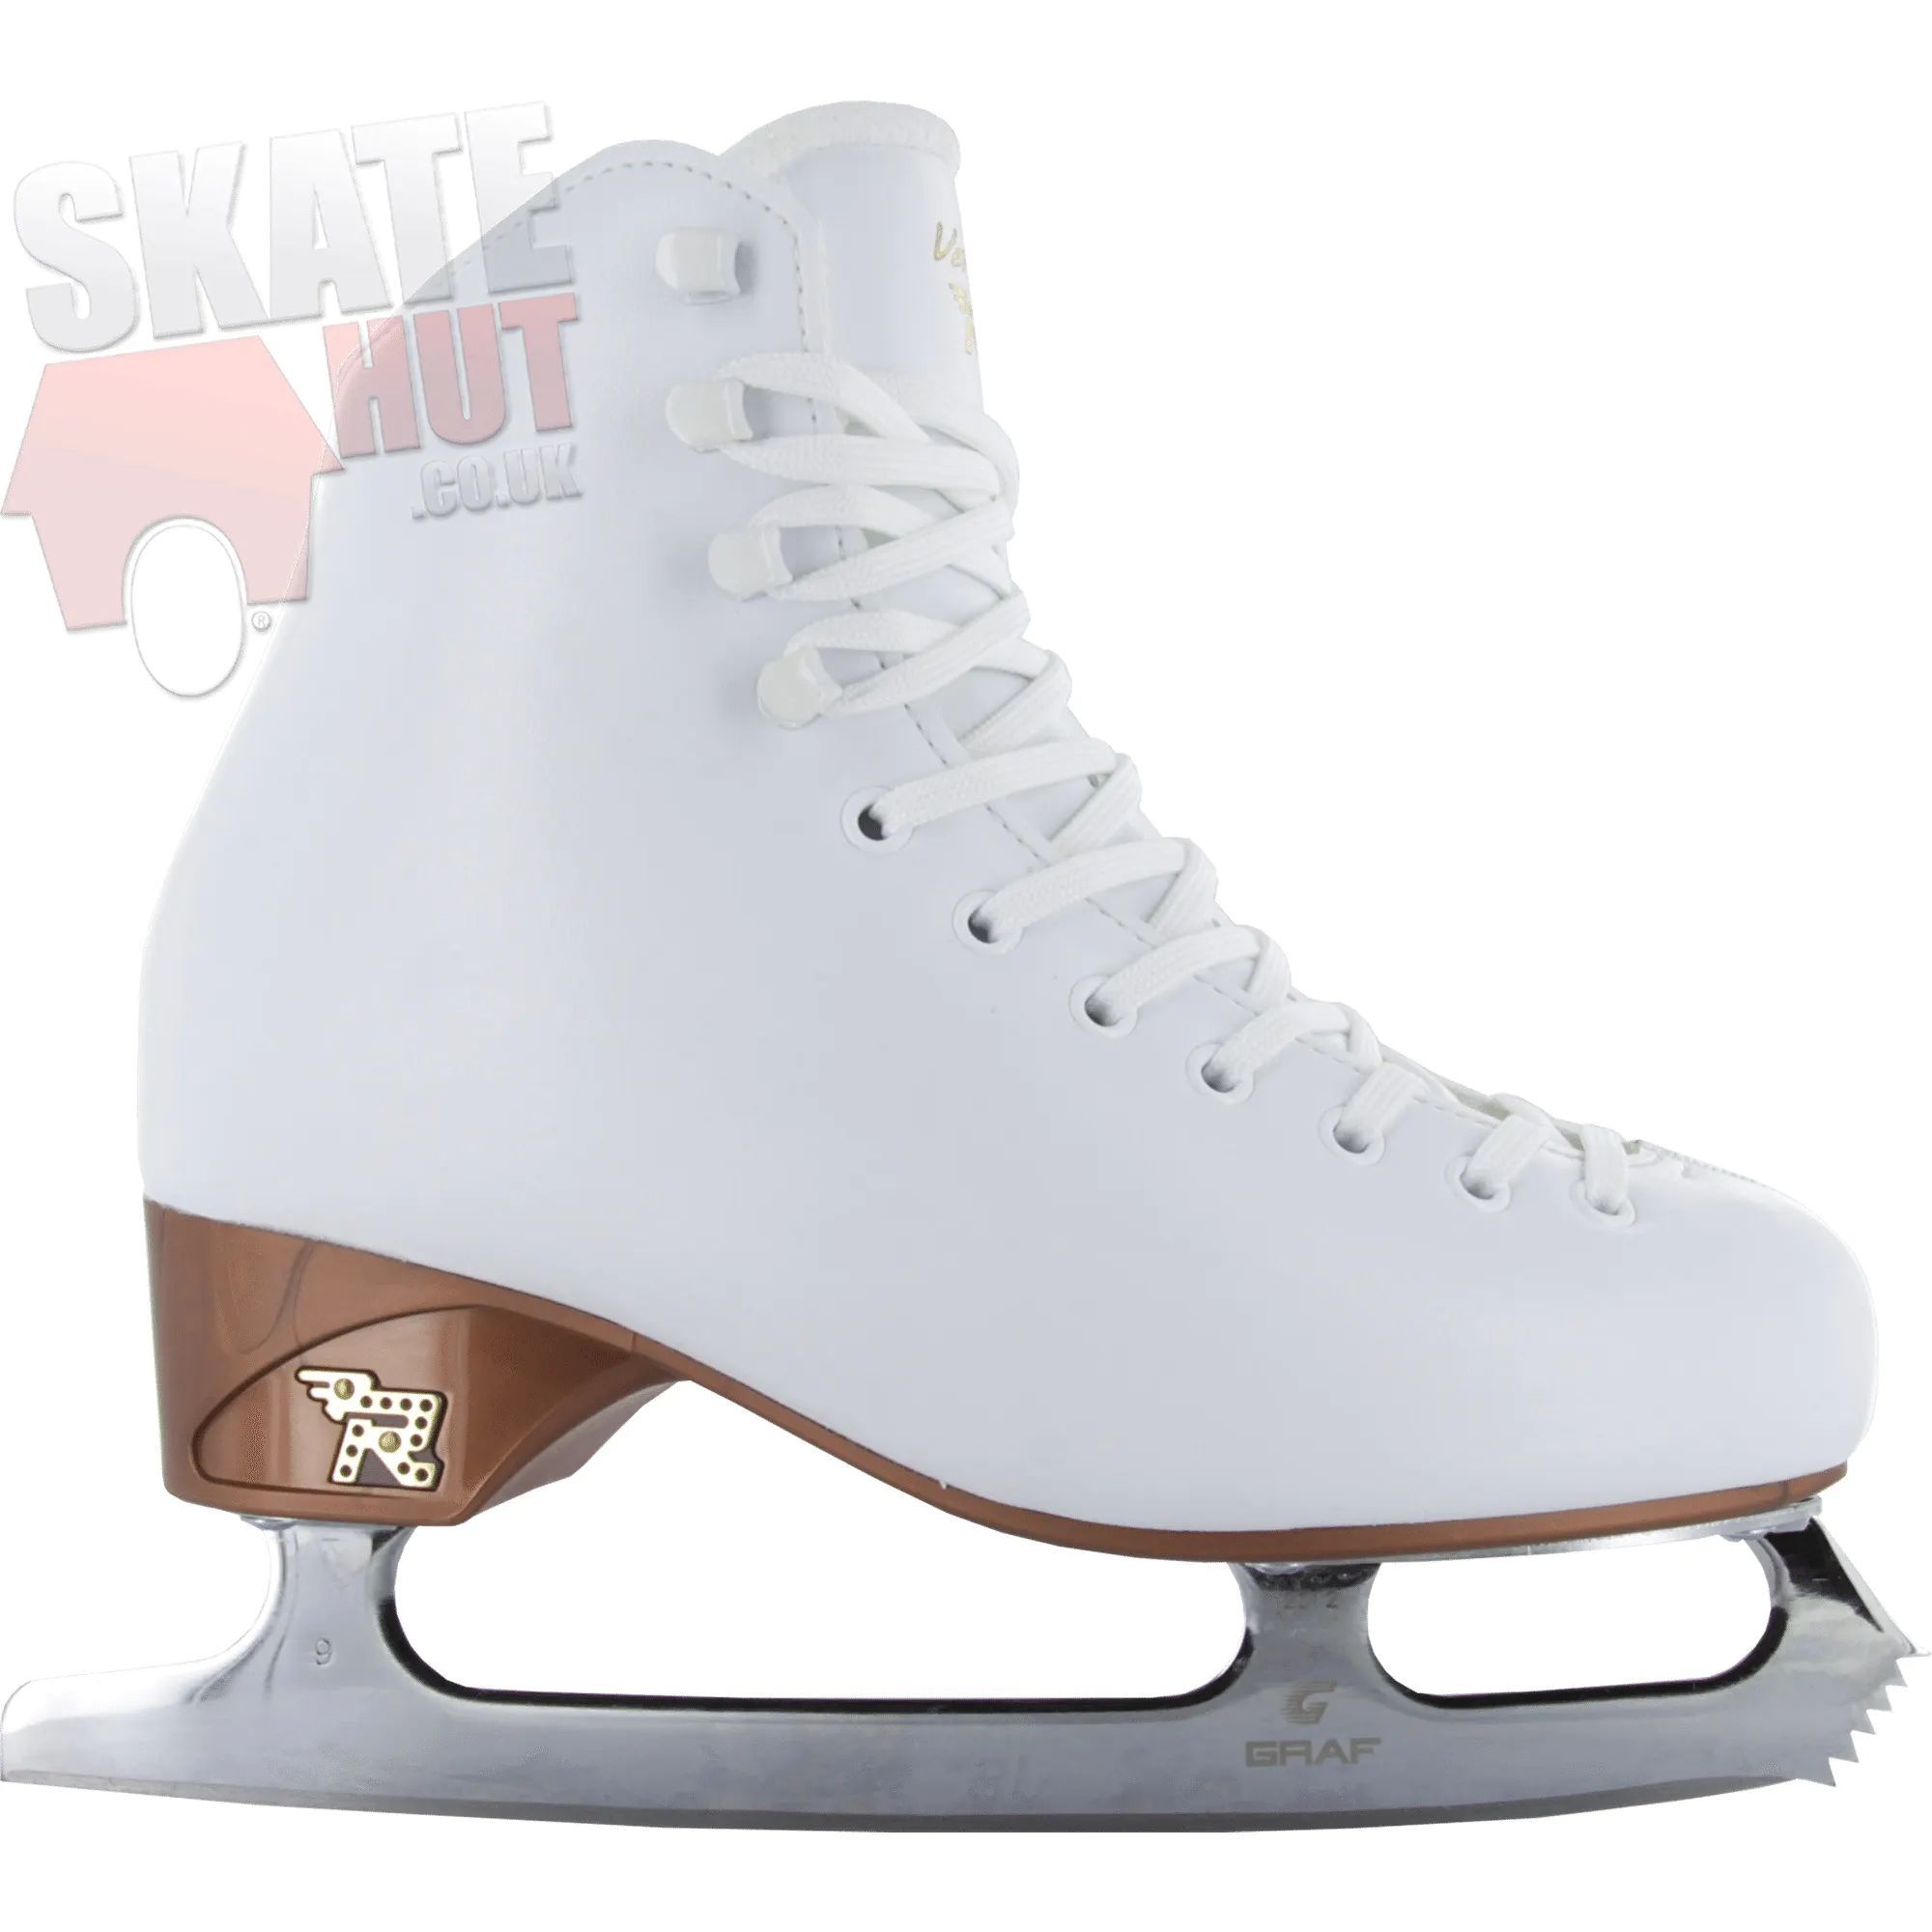 Reebok Pump Alpine womens soft boot ice skates size 8 new SKRALP ladies figure 